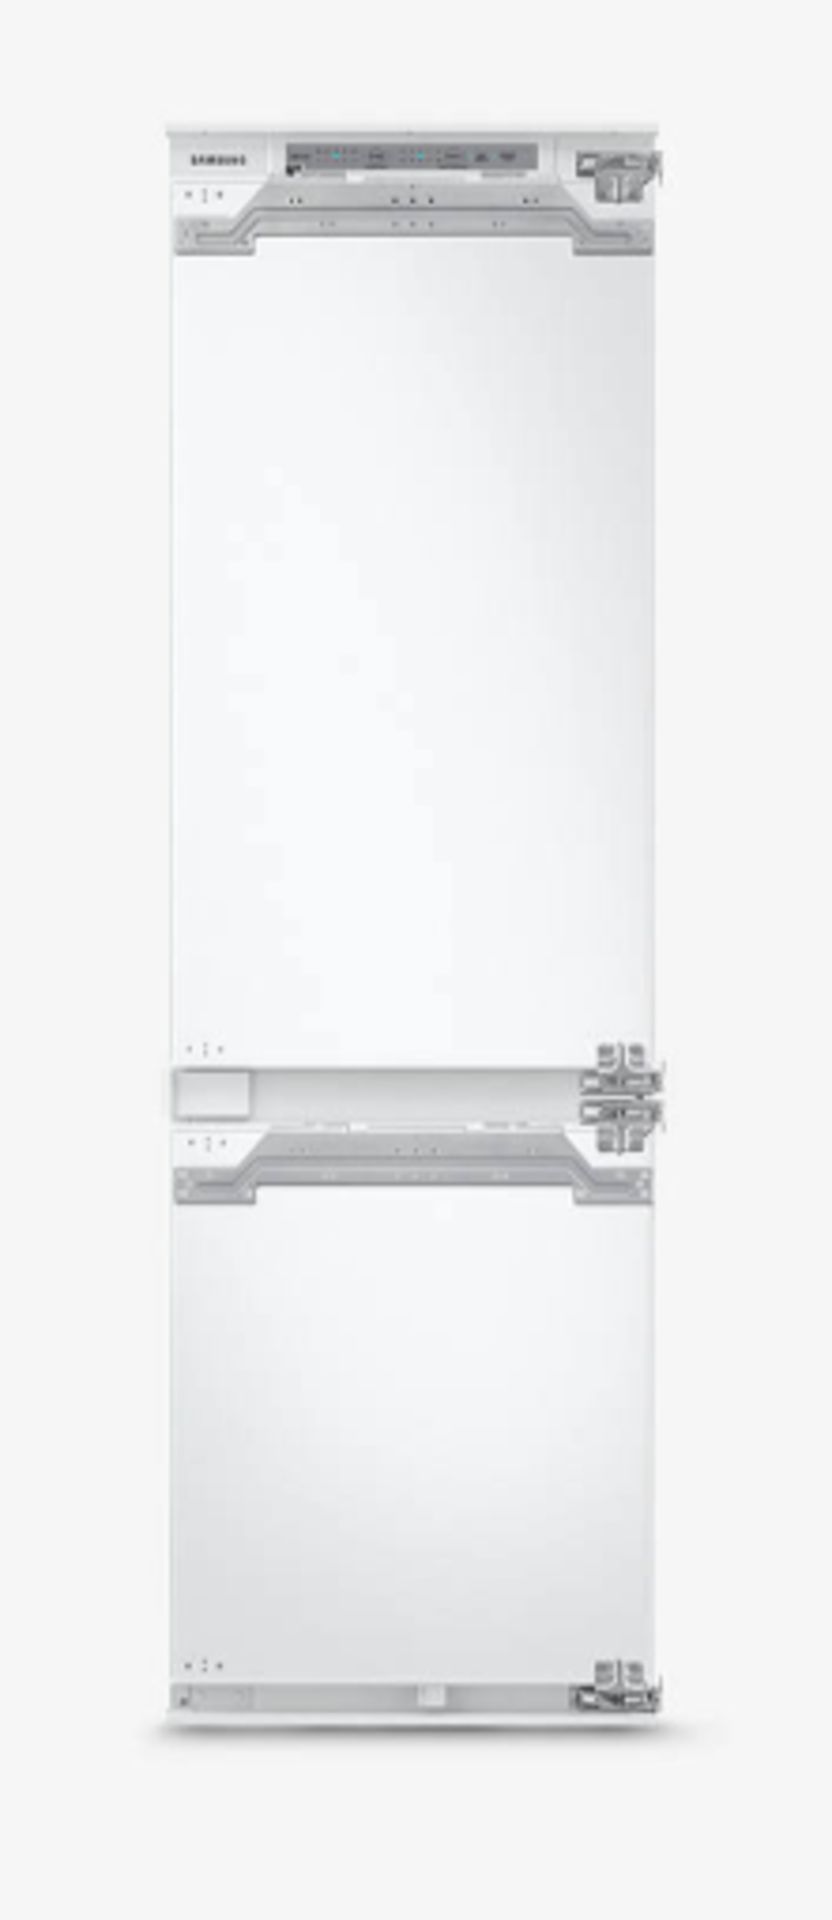 Item Description - Samsung BRB26615EWW Integrated 60/40 Fridge Freezer - Stock Number - 85...